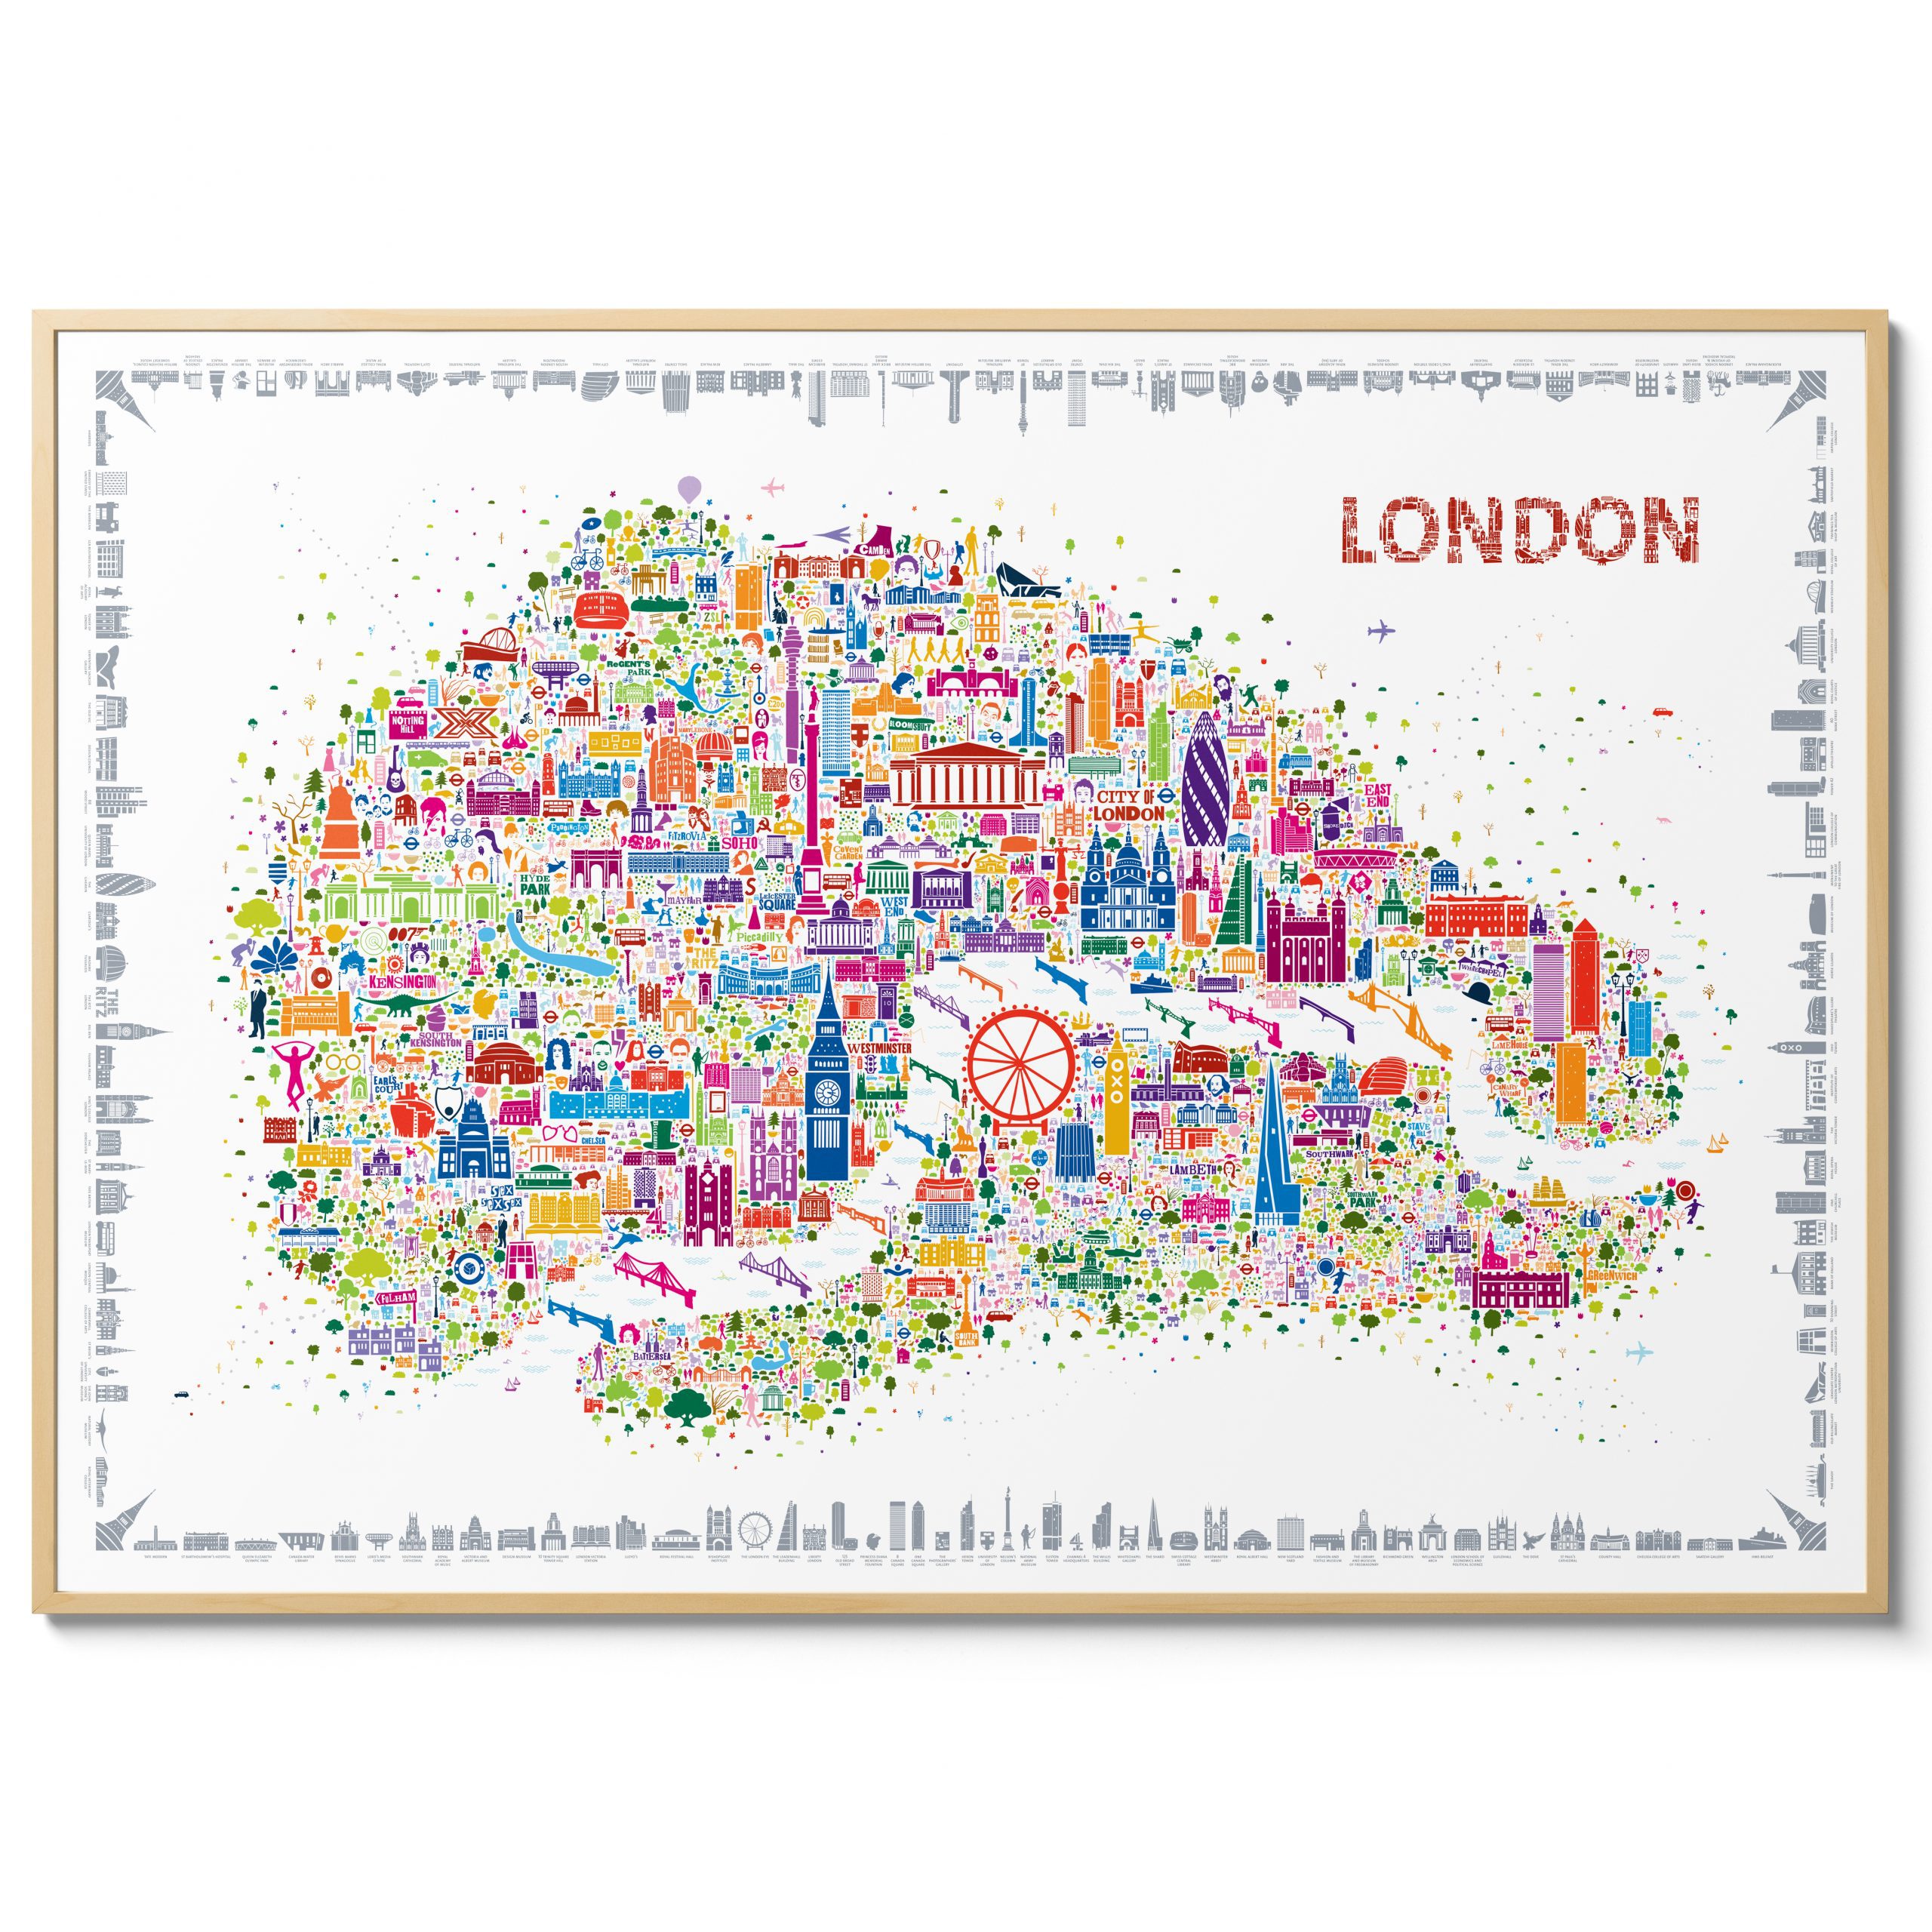 01_Alfalfa_London_Iconic_central_park_wall_art_poster_print_map_art_artprint